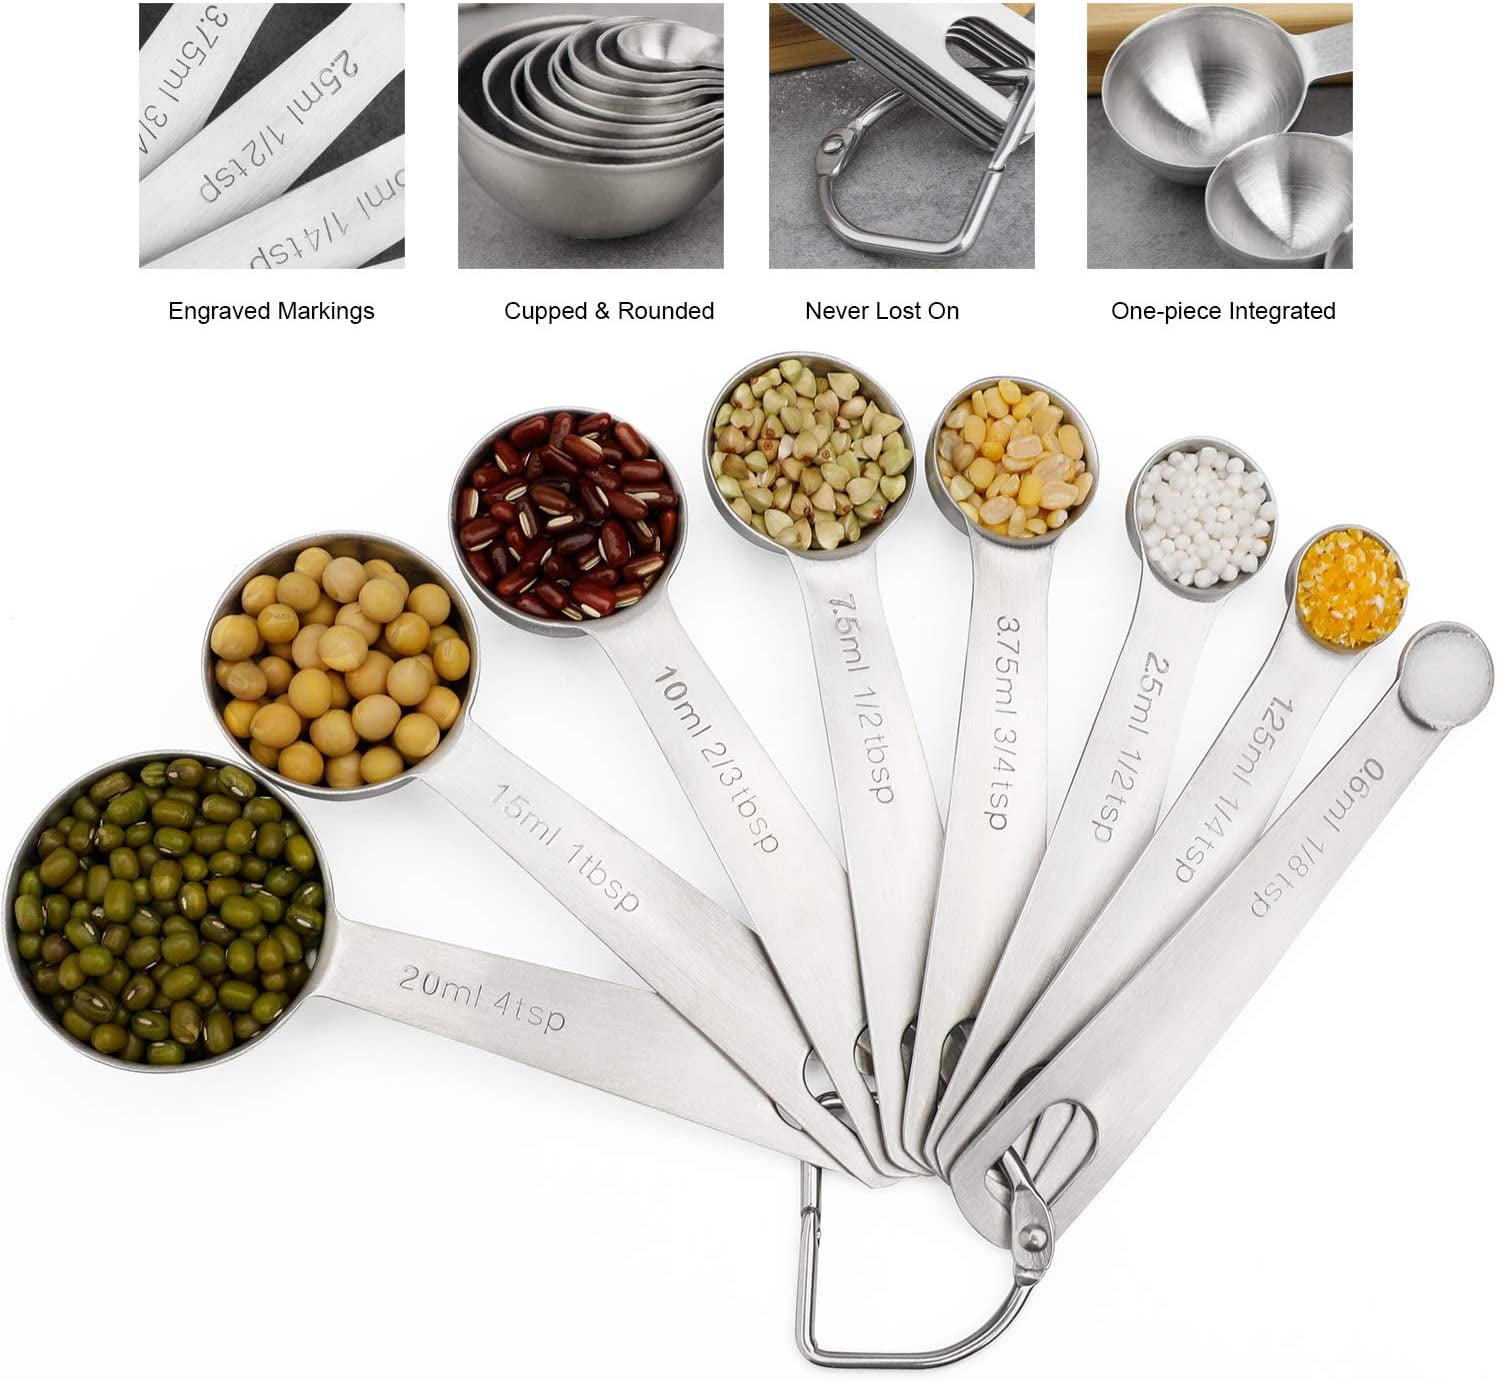 9 inch Long-Handled Measuring Spoons (4) - Allegheny Treenware, LLC